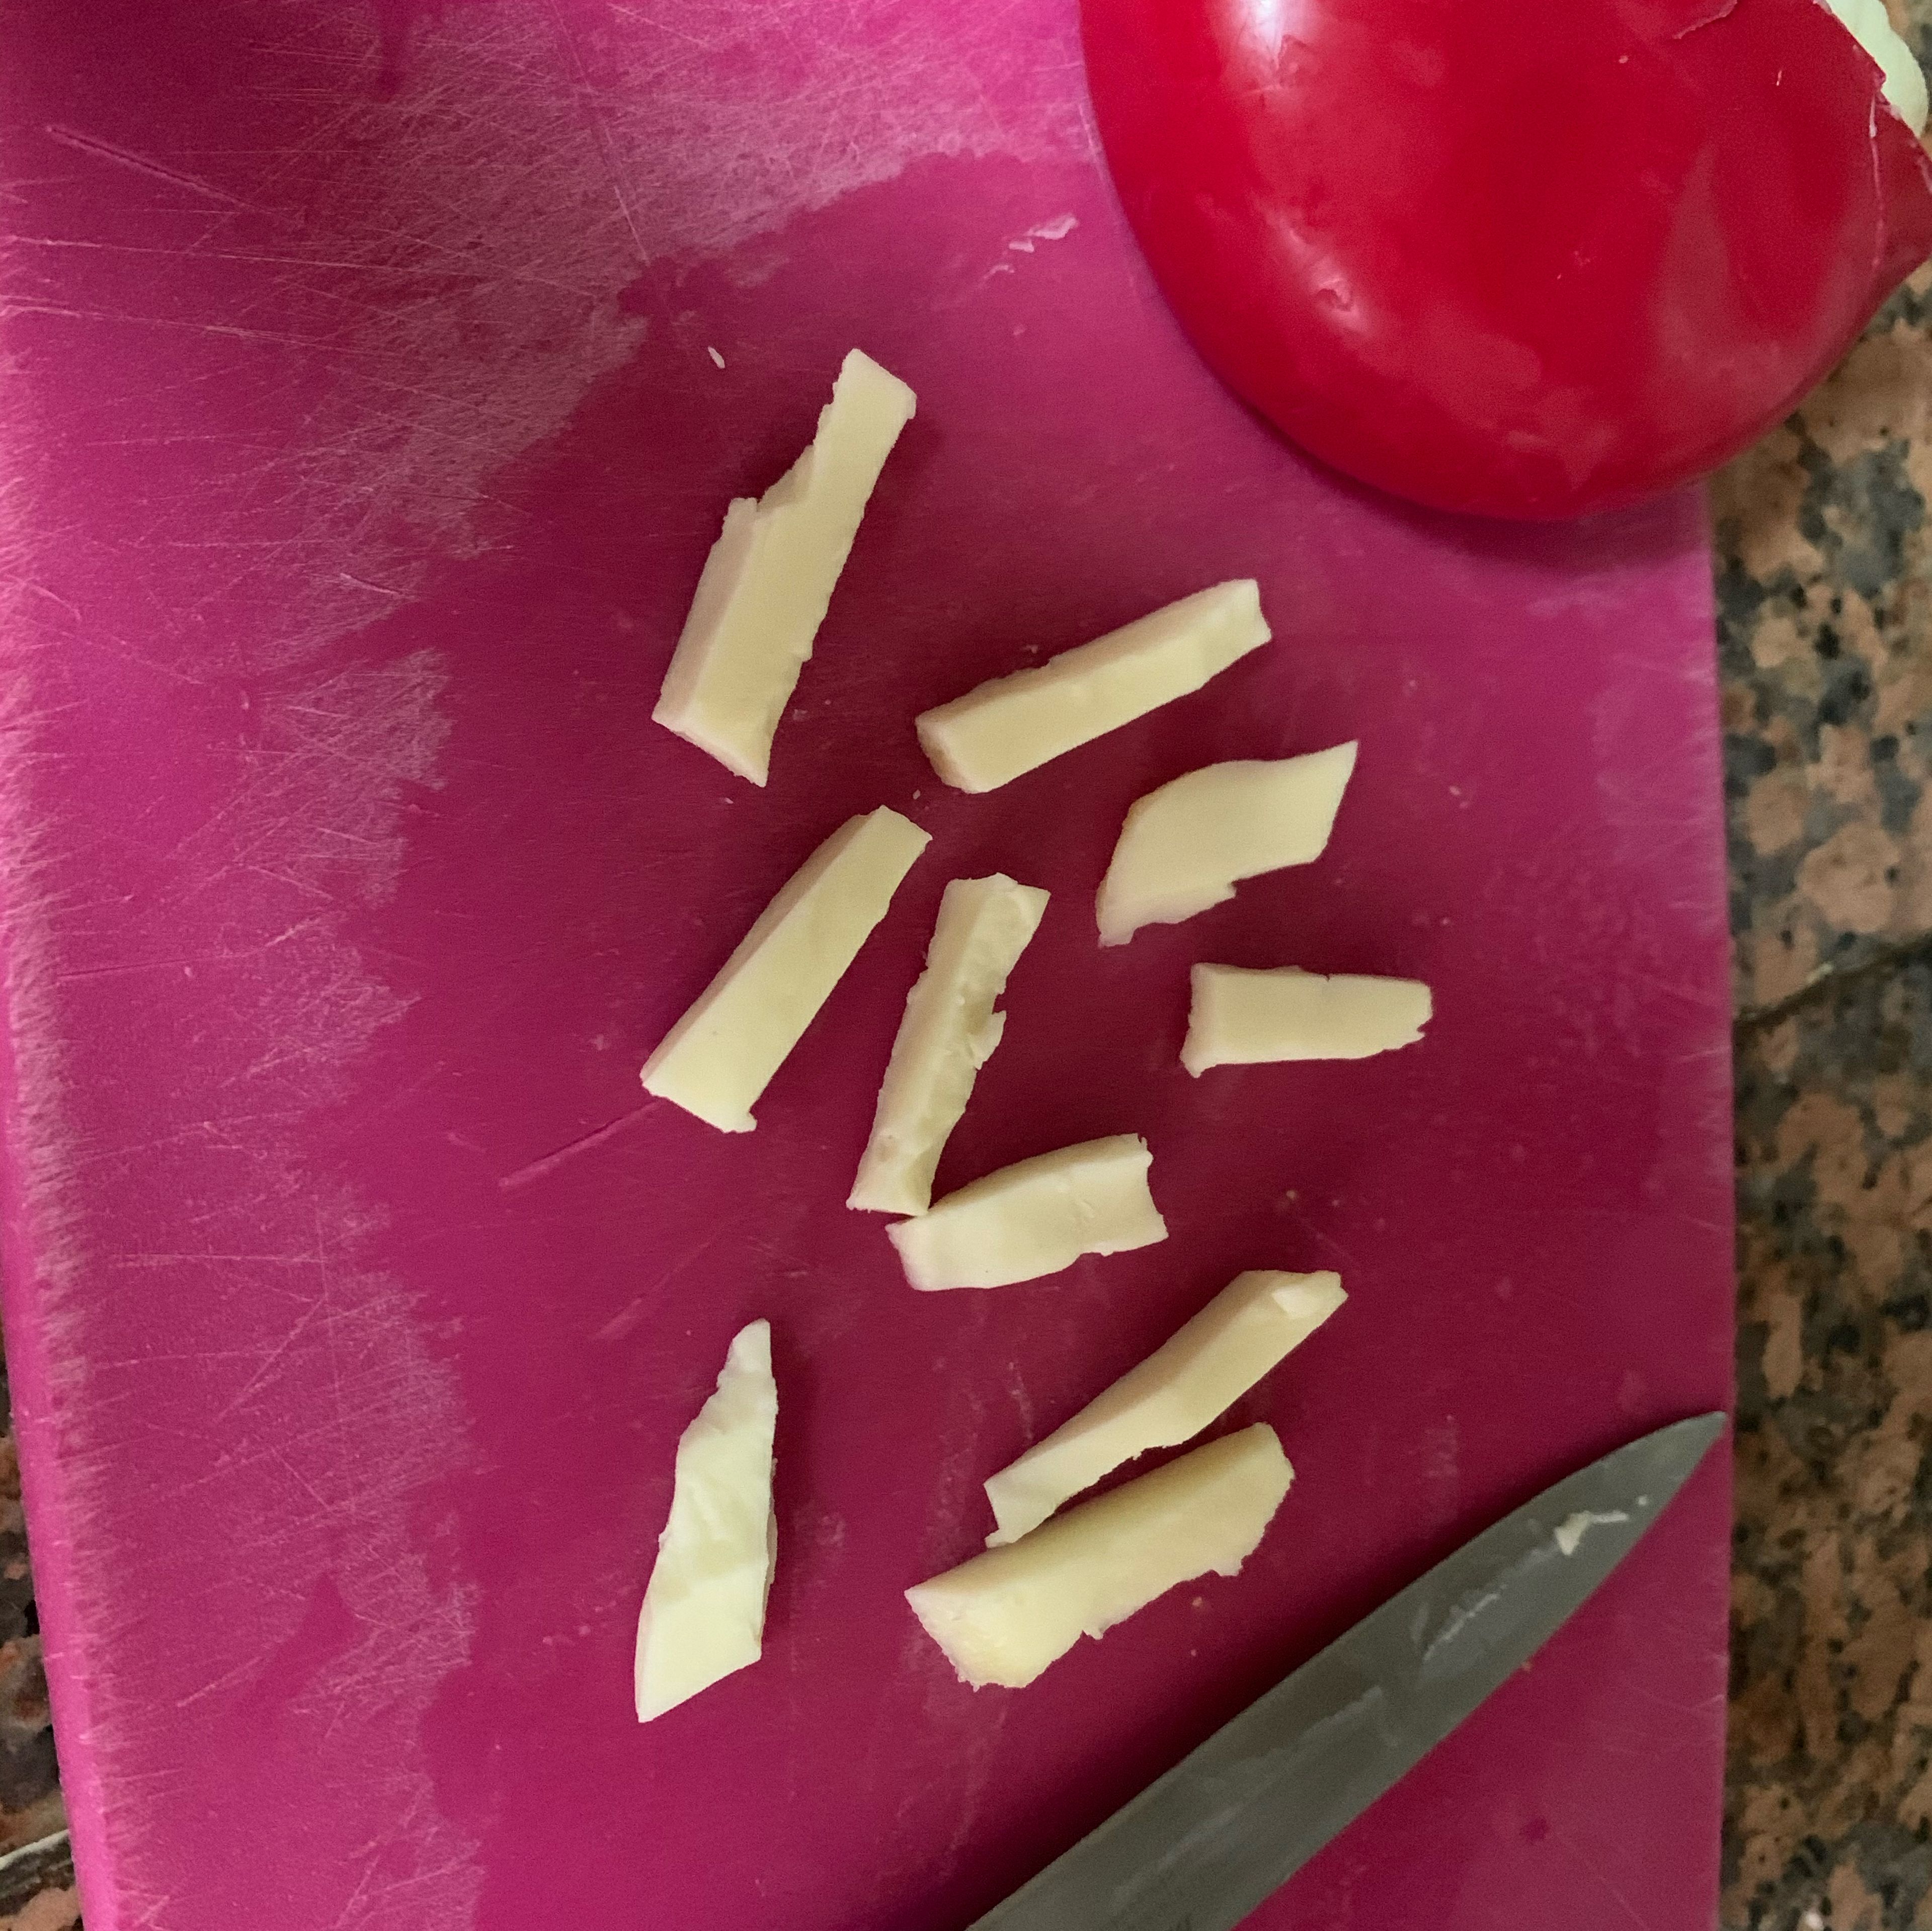 Slice the Gouda cheese